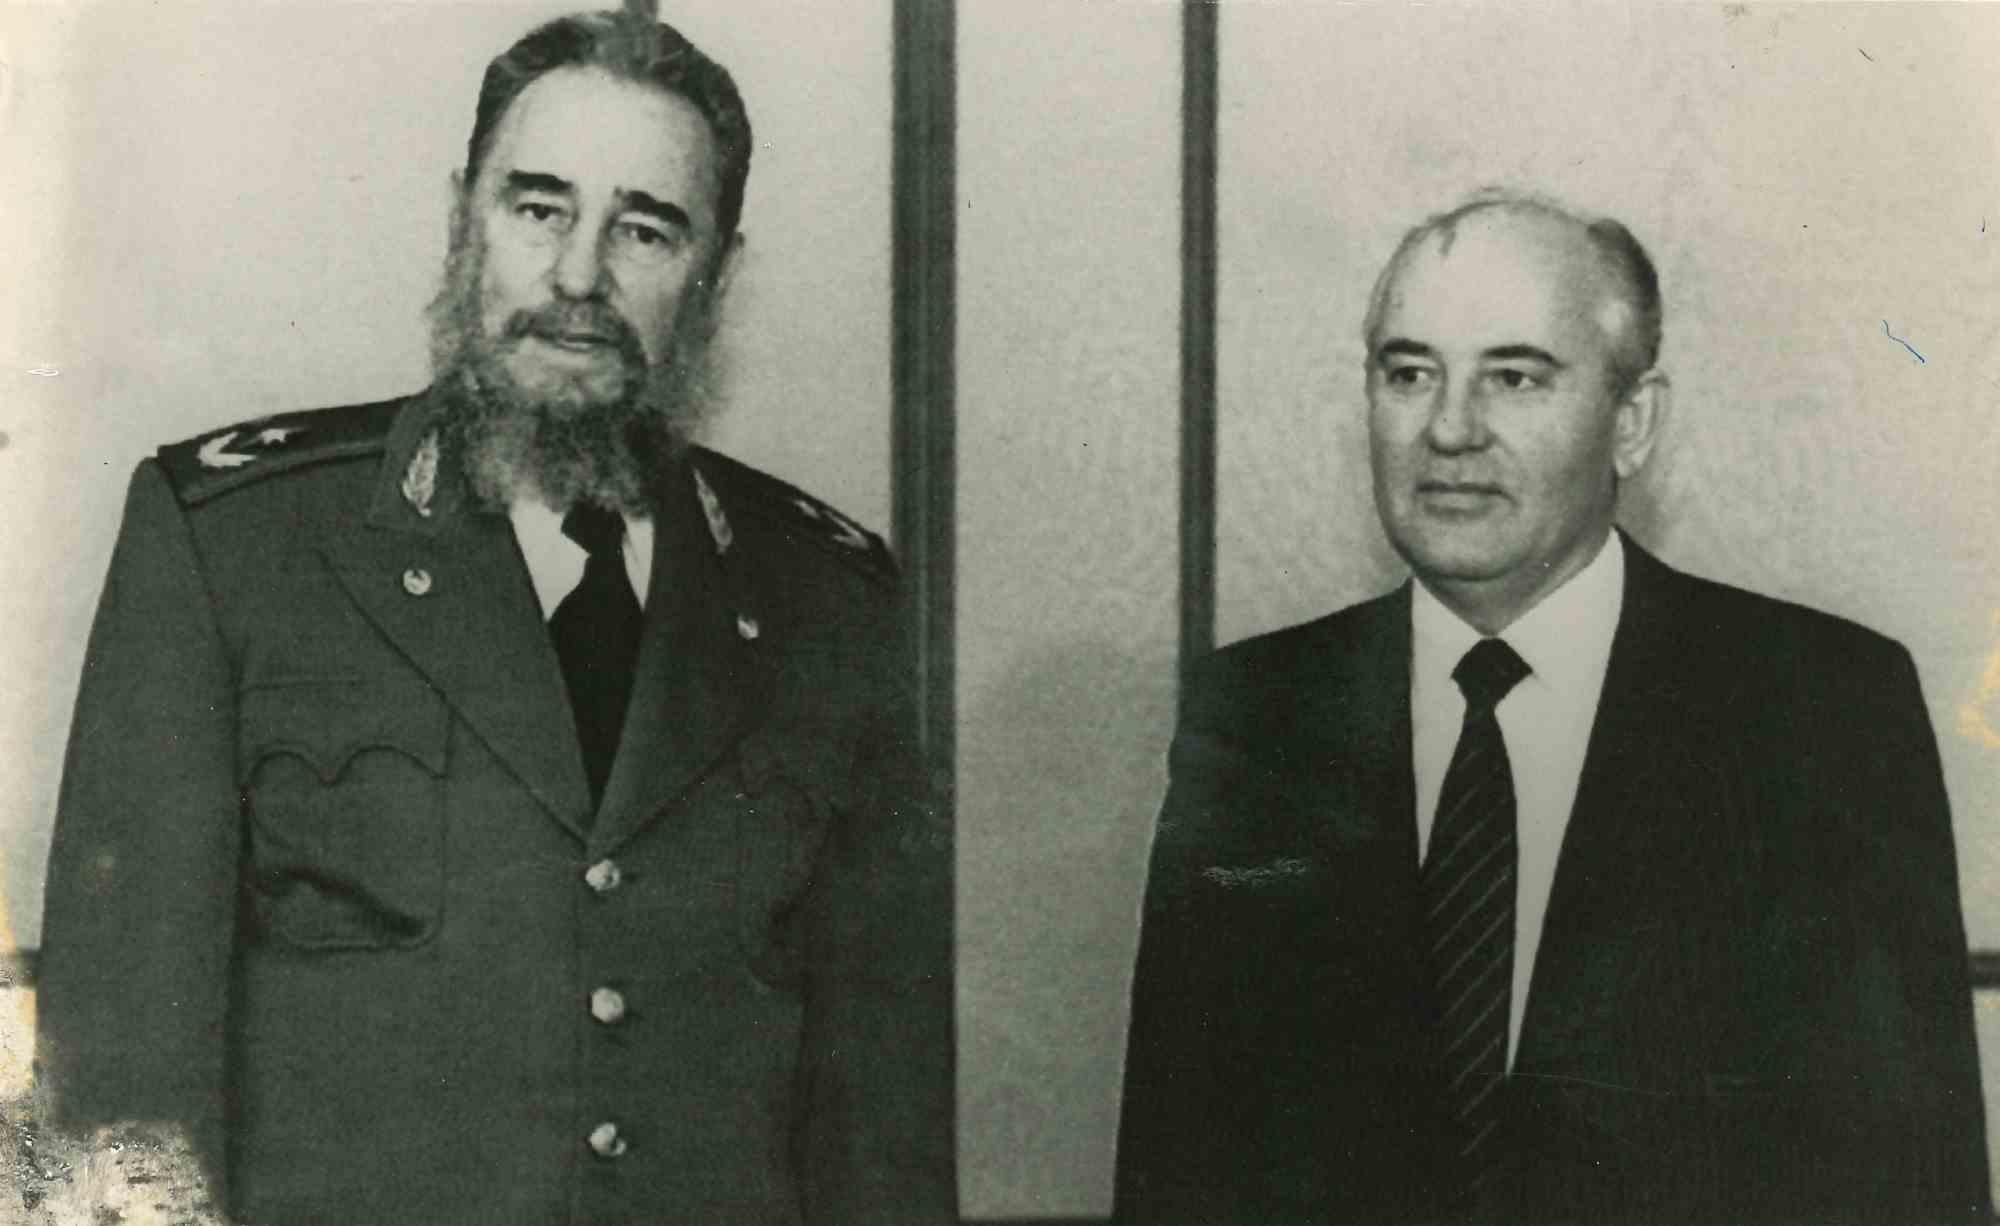 Unknown Figurative Photograph - Gorbachev and Fidel Castro - Moscow - 1980s